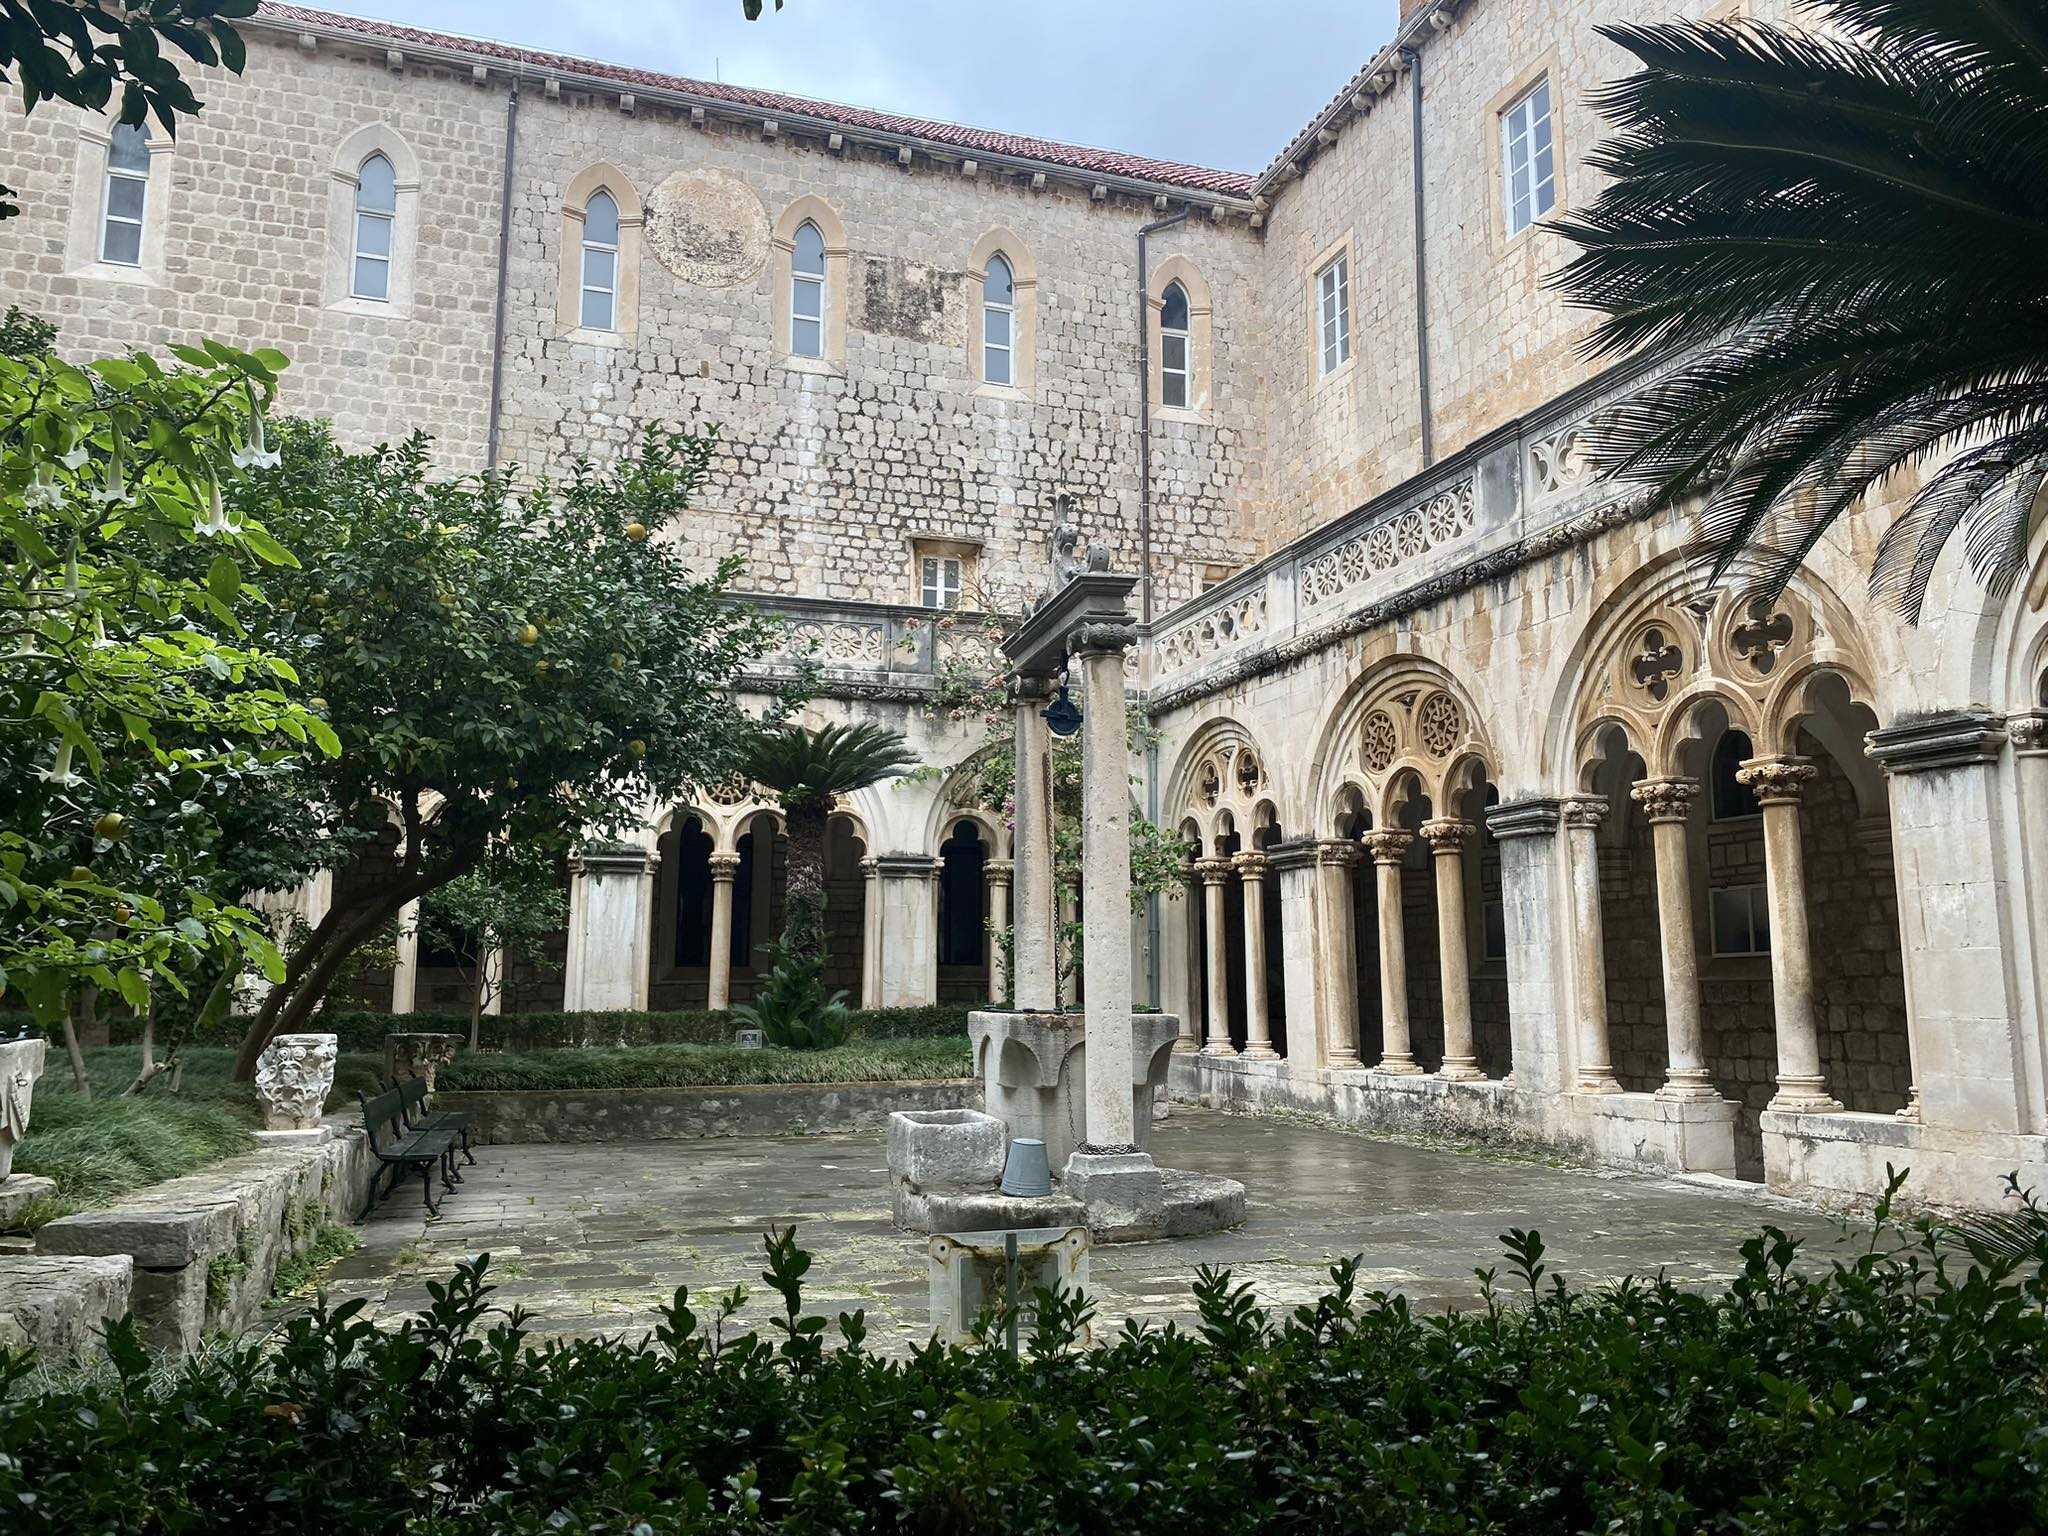 Dominican Monastery, Dubrovnik